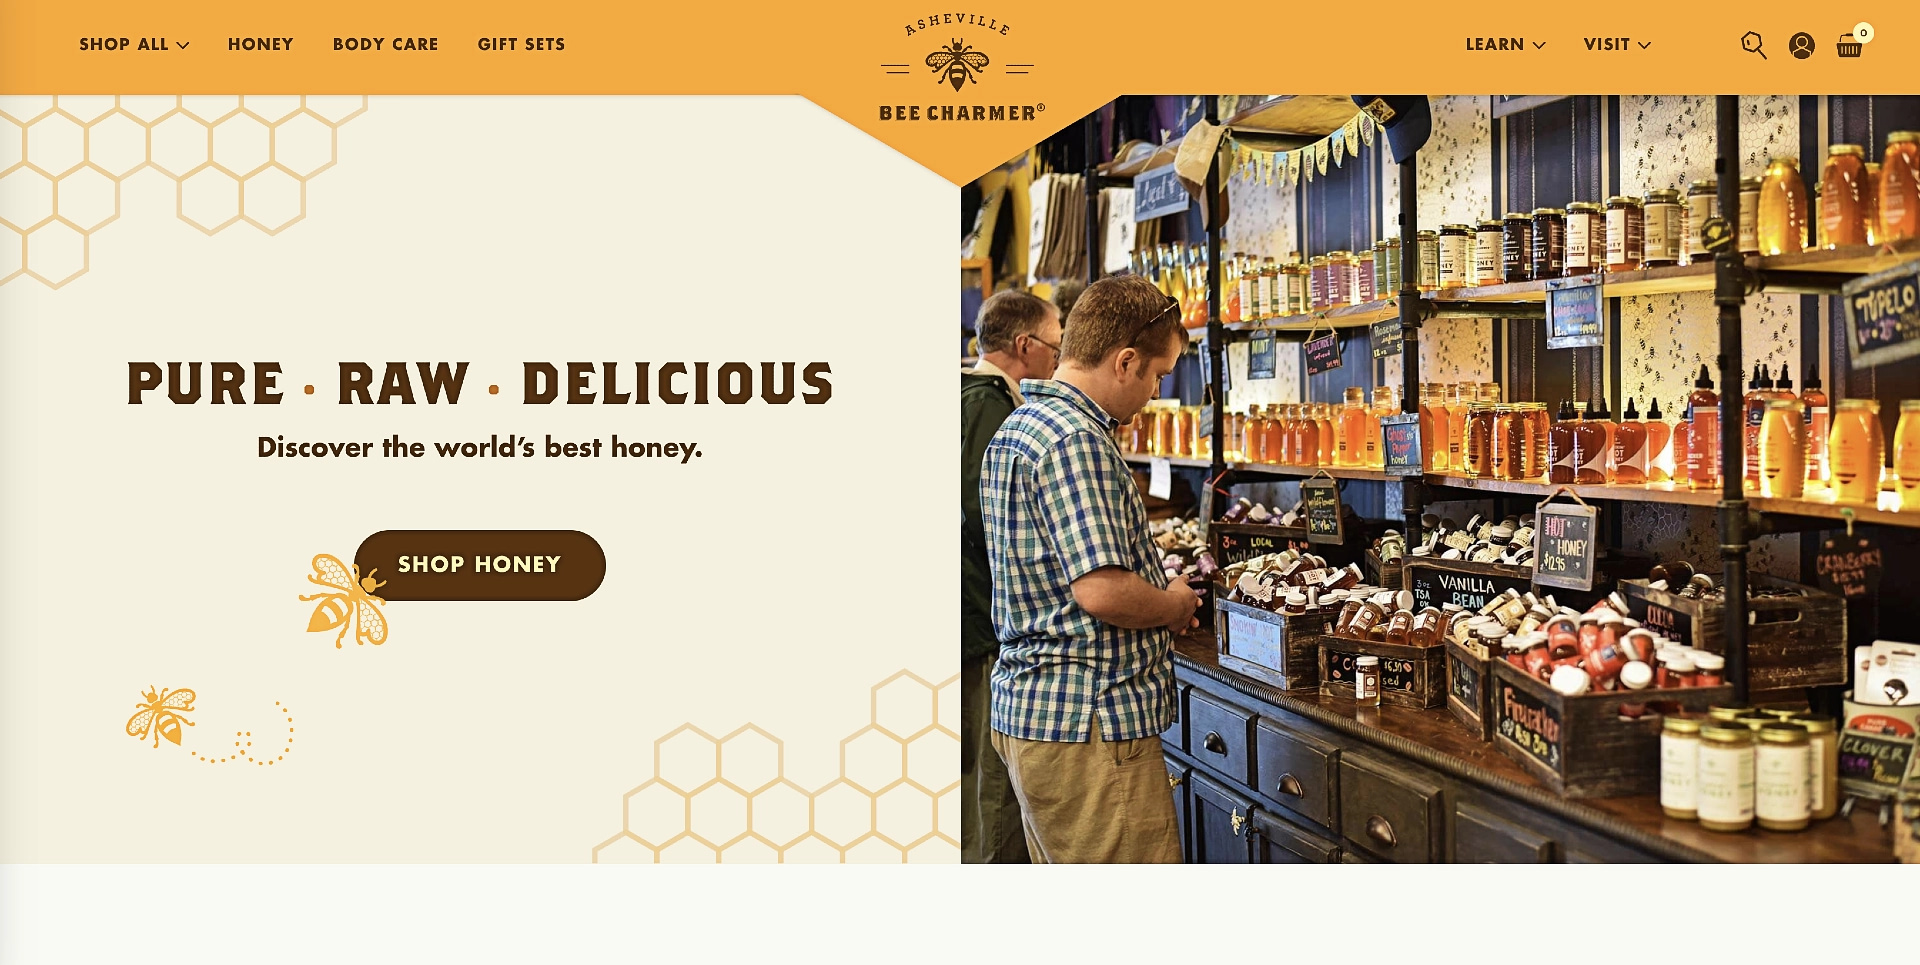 Asheville Bee Charmer homepage